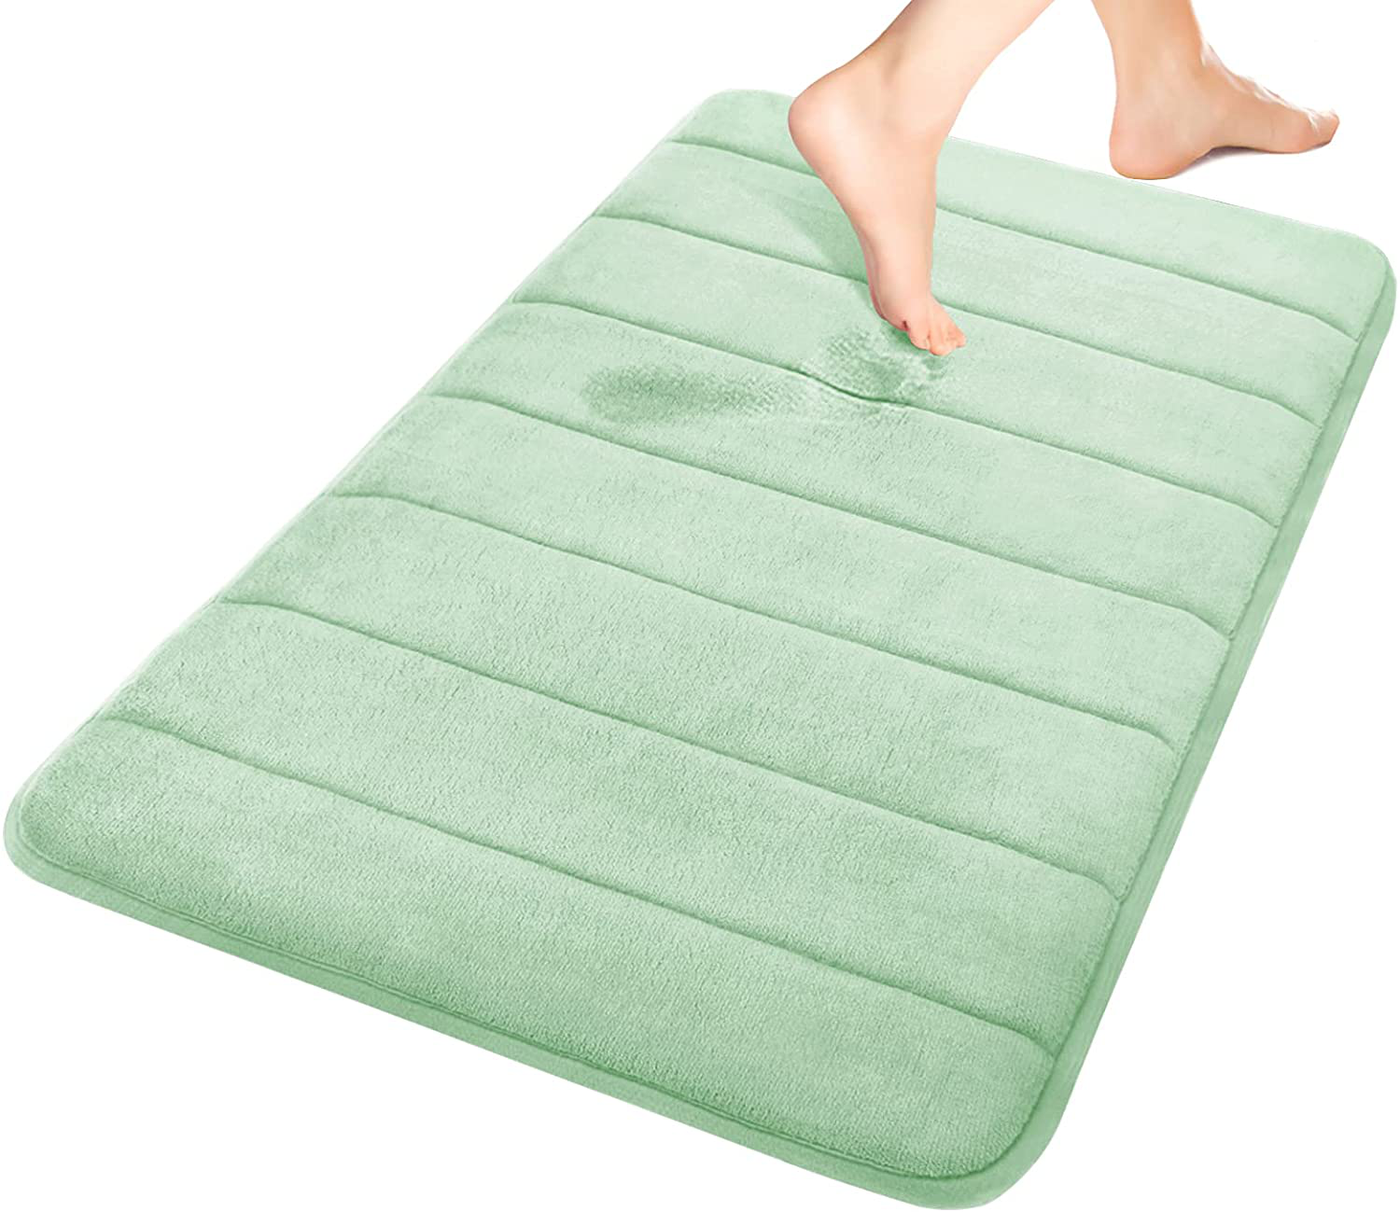 Memory Foam Bath Mat Rug, Comfortable, Soft, Super Water Absorption, Machine Wash, Non-Slip for Bathroom 